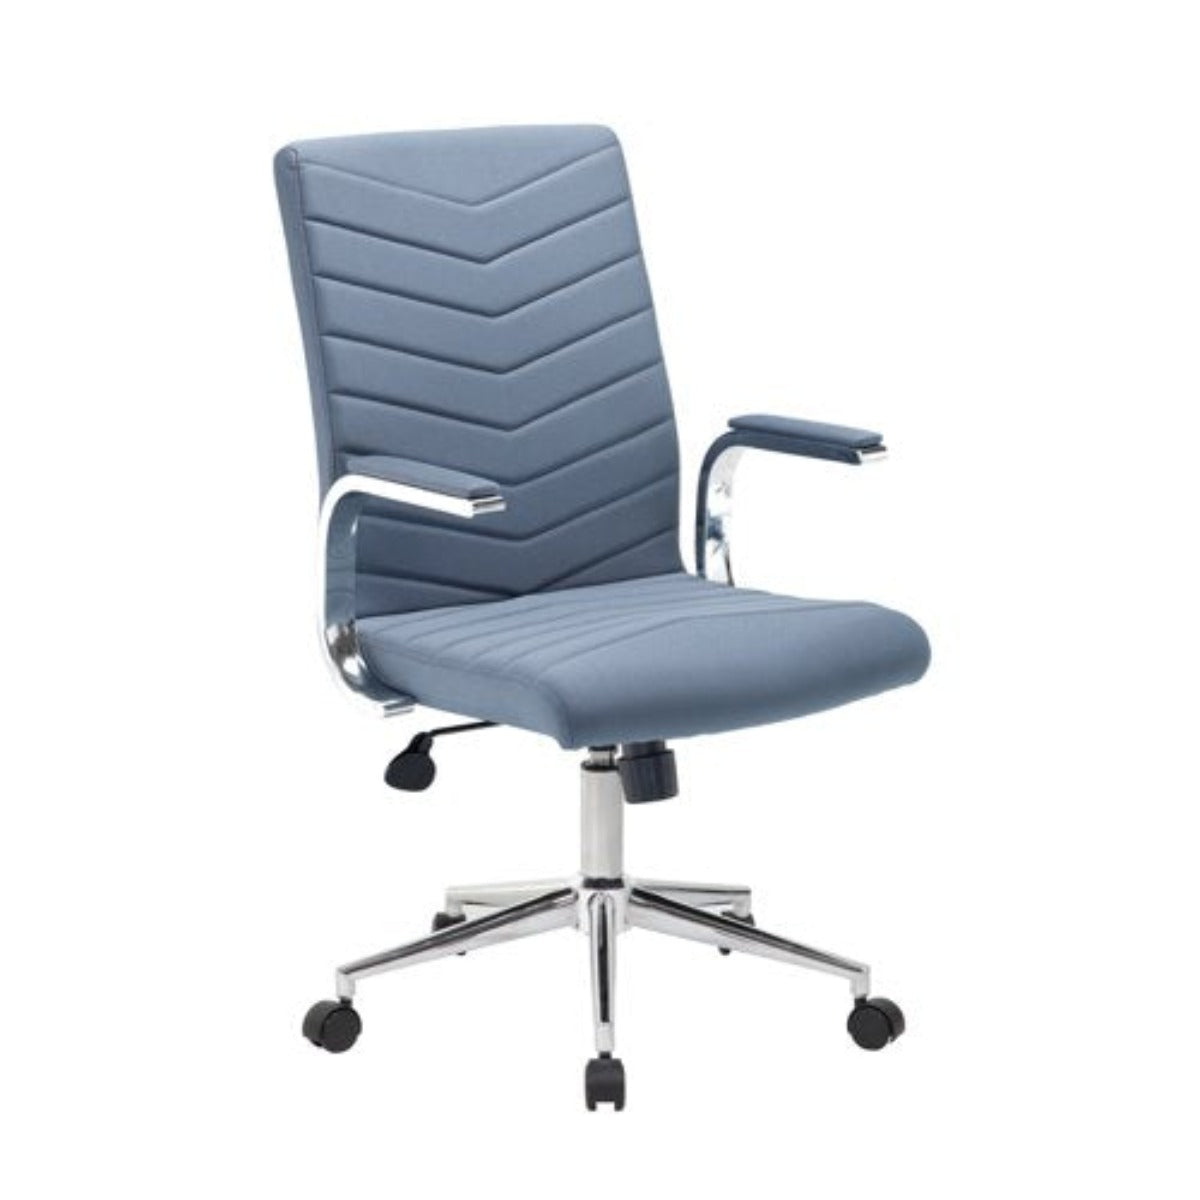 Martinez Stylish chair in Grey fabric